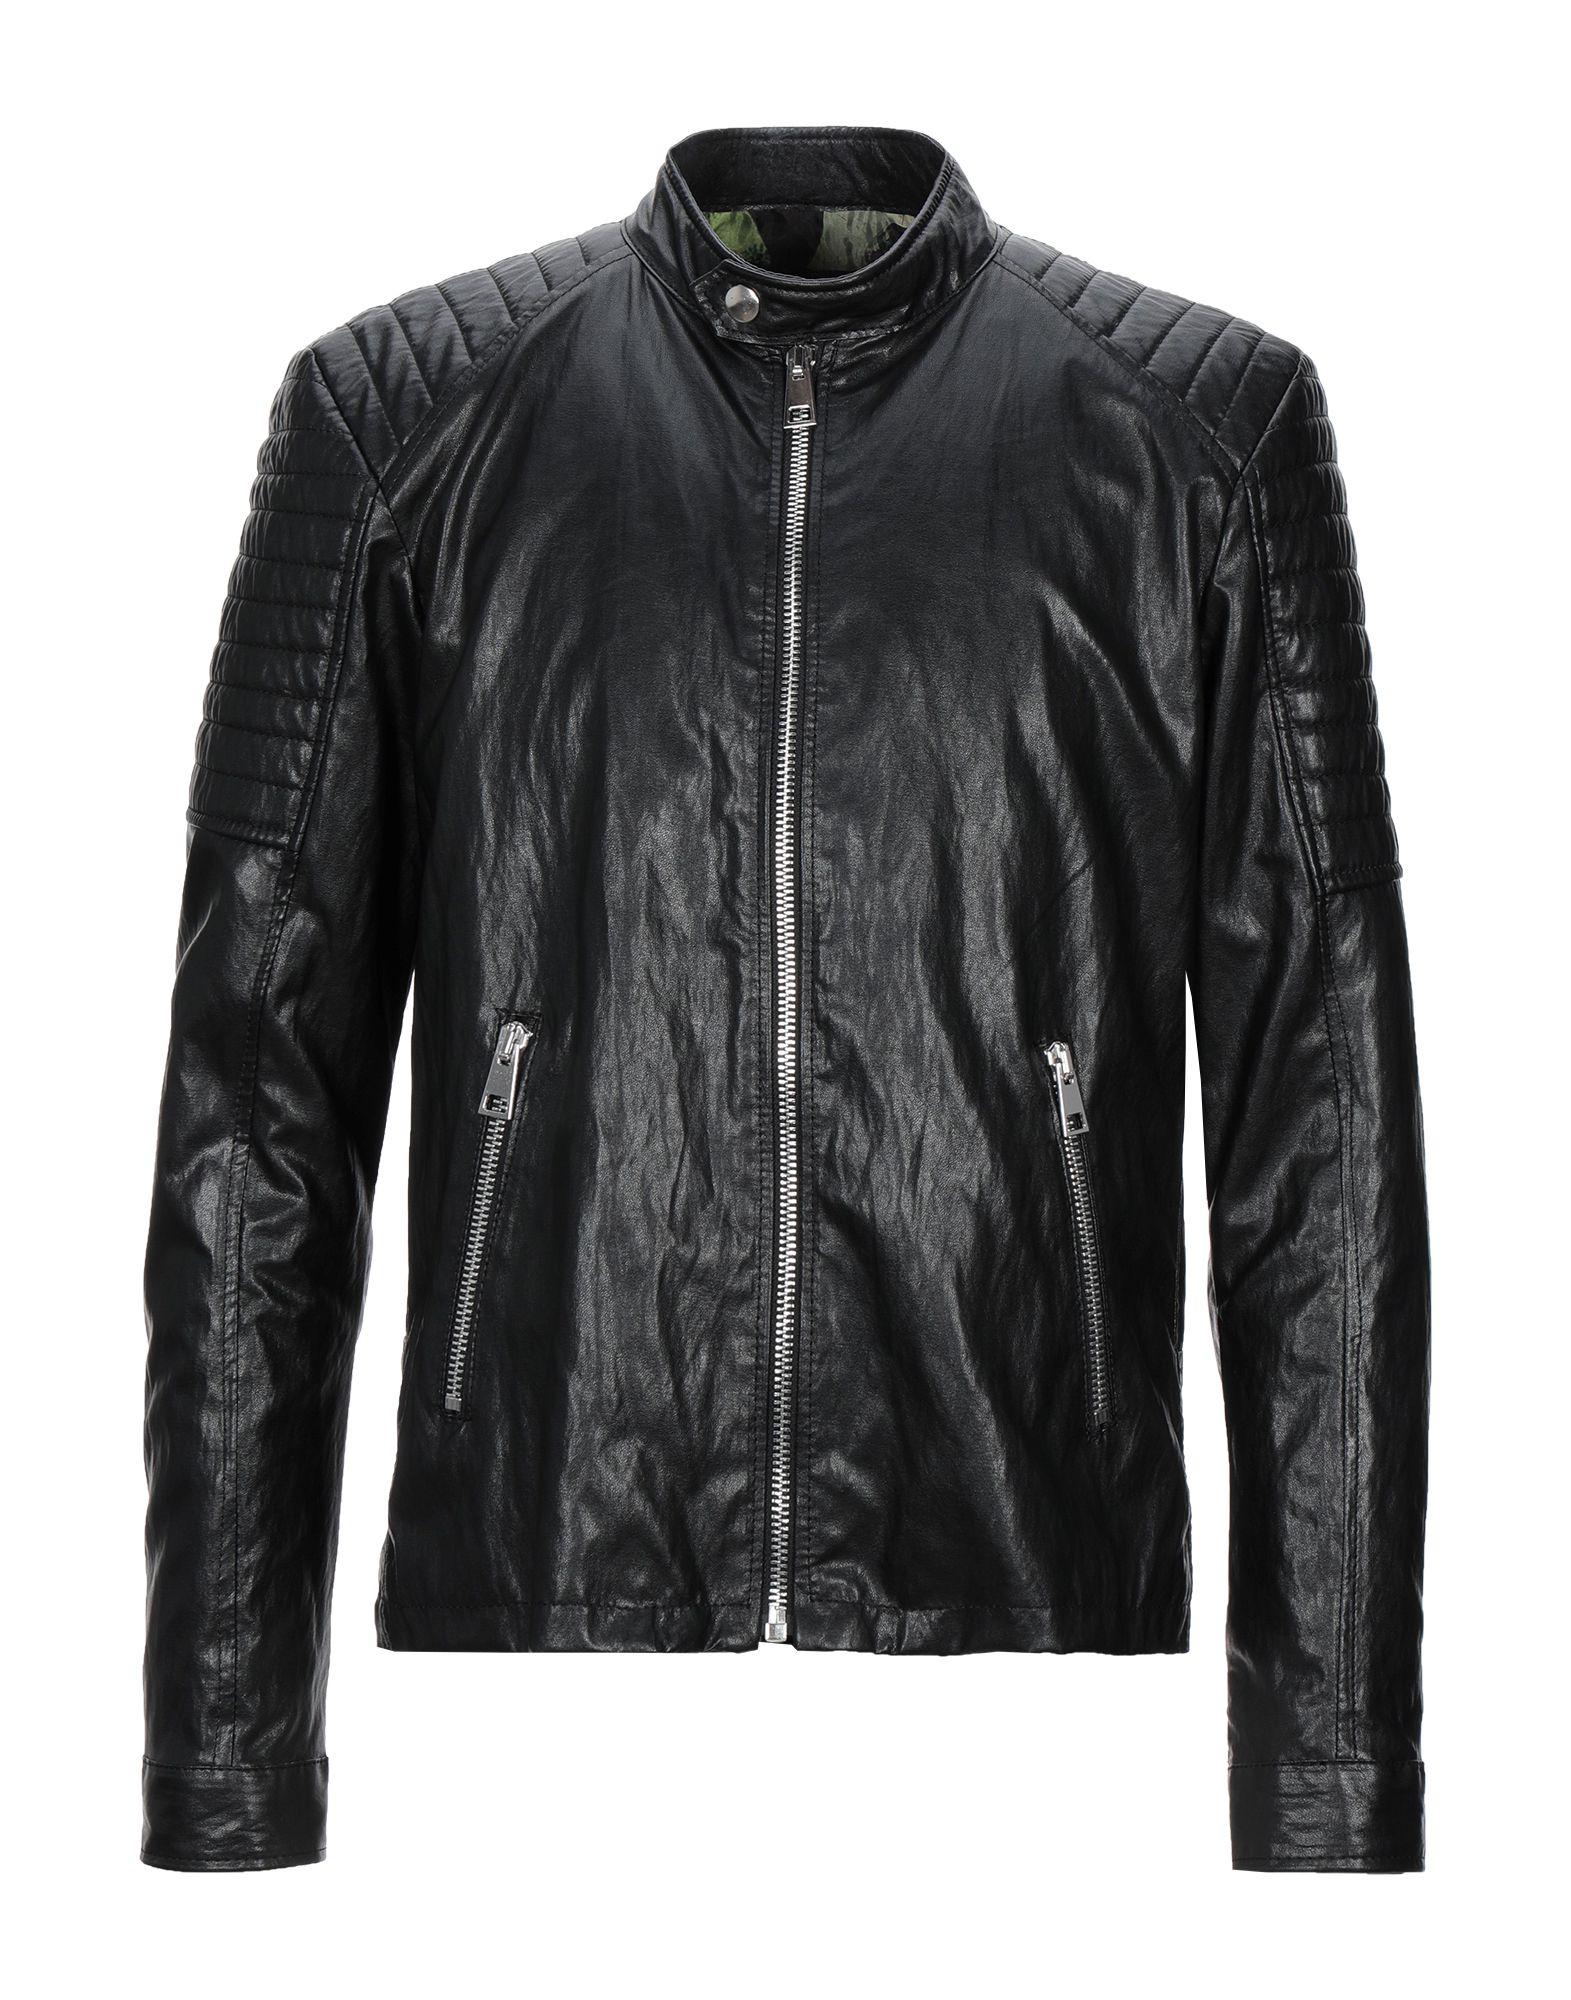 Imperial Jacket in Black for Men - Lyst